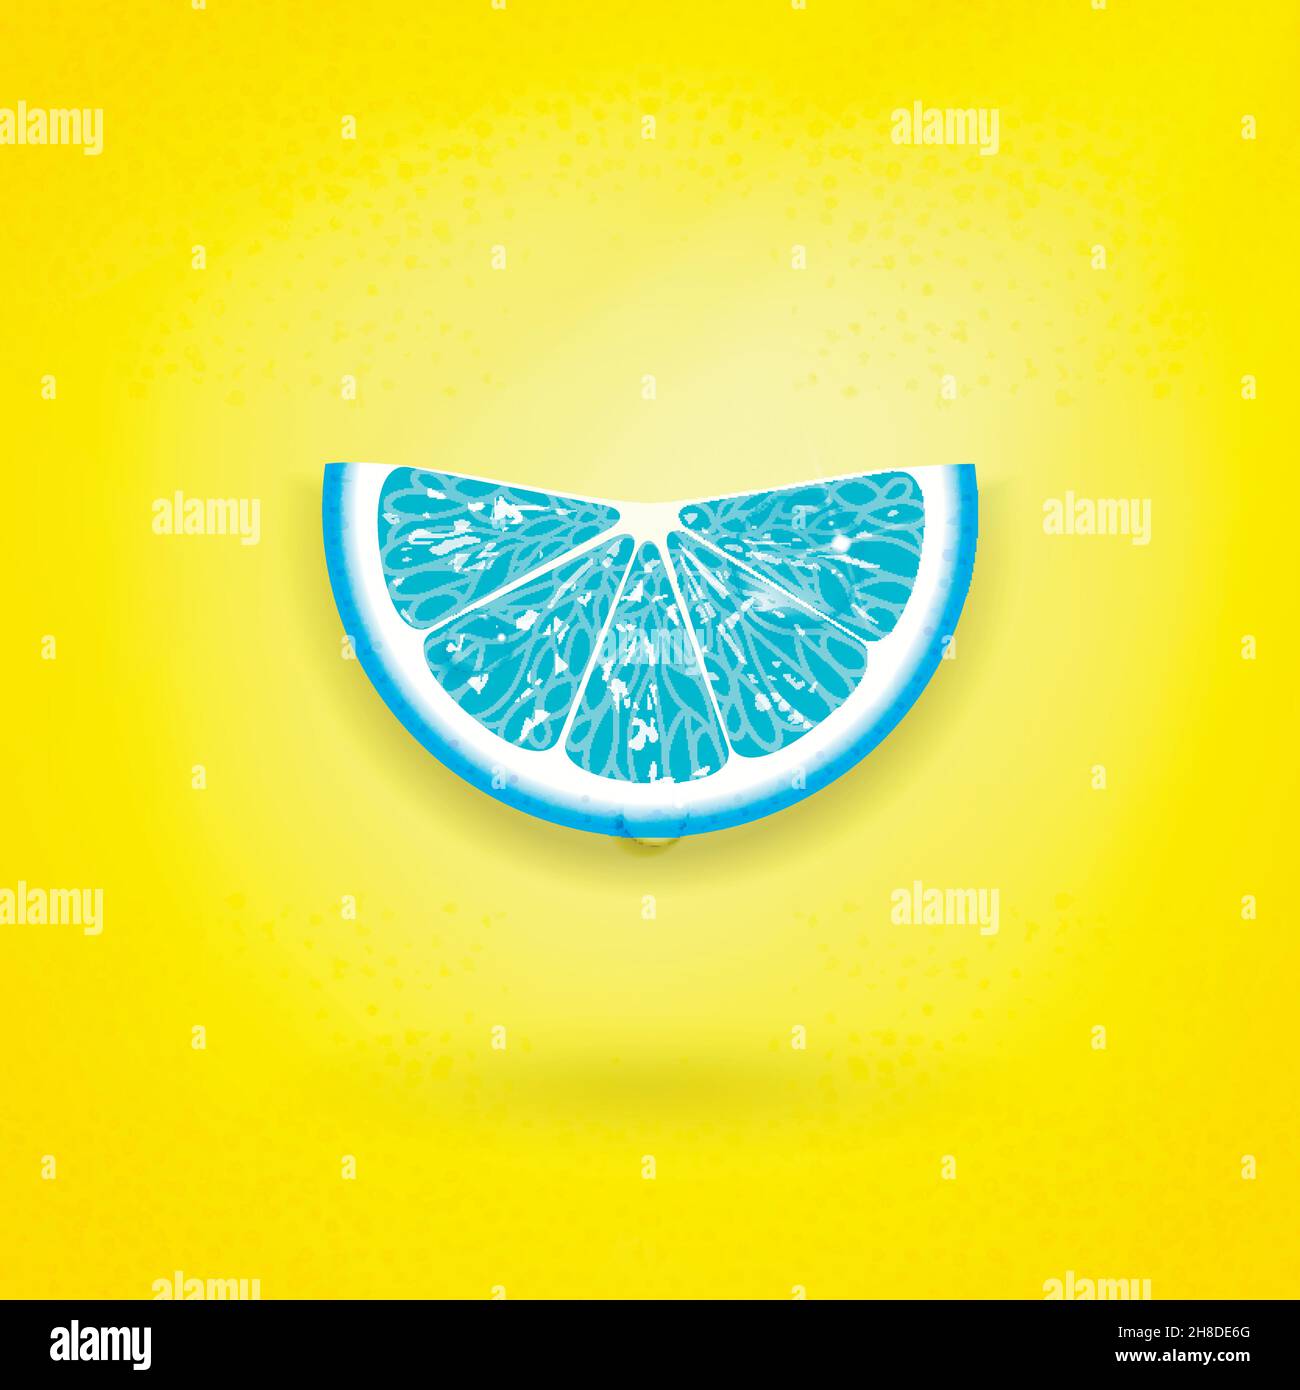 Lemon Color Images – Browse 64,409 Stock Photos, Vectors, and Video